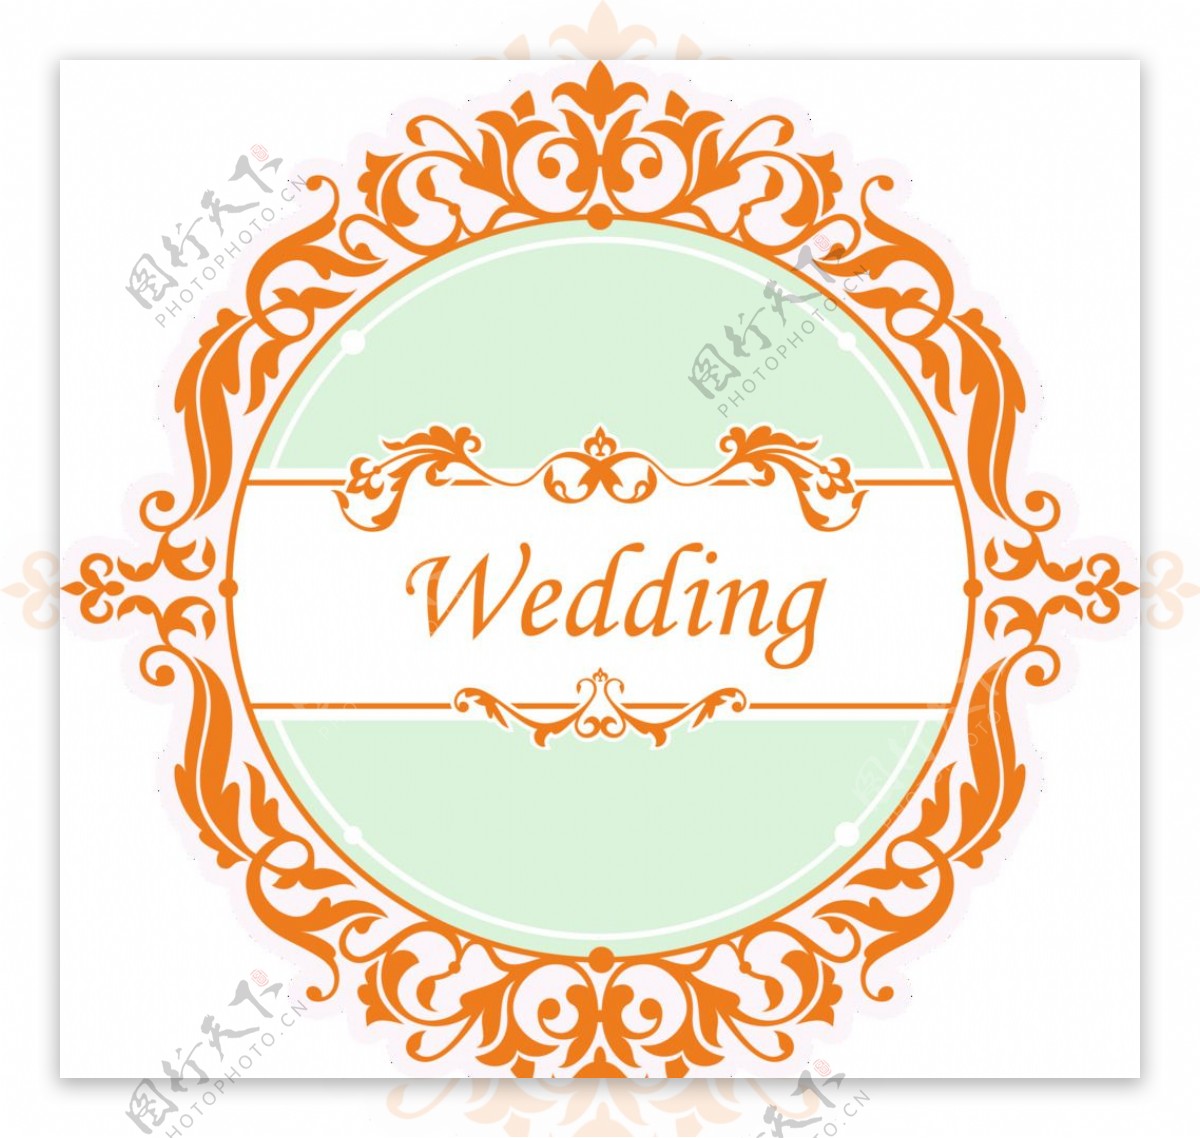 wedding牌图片